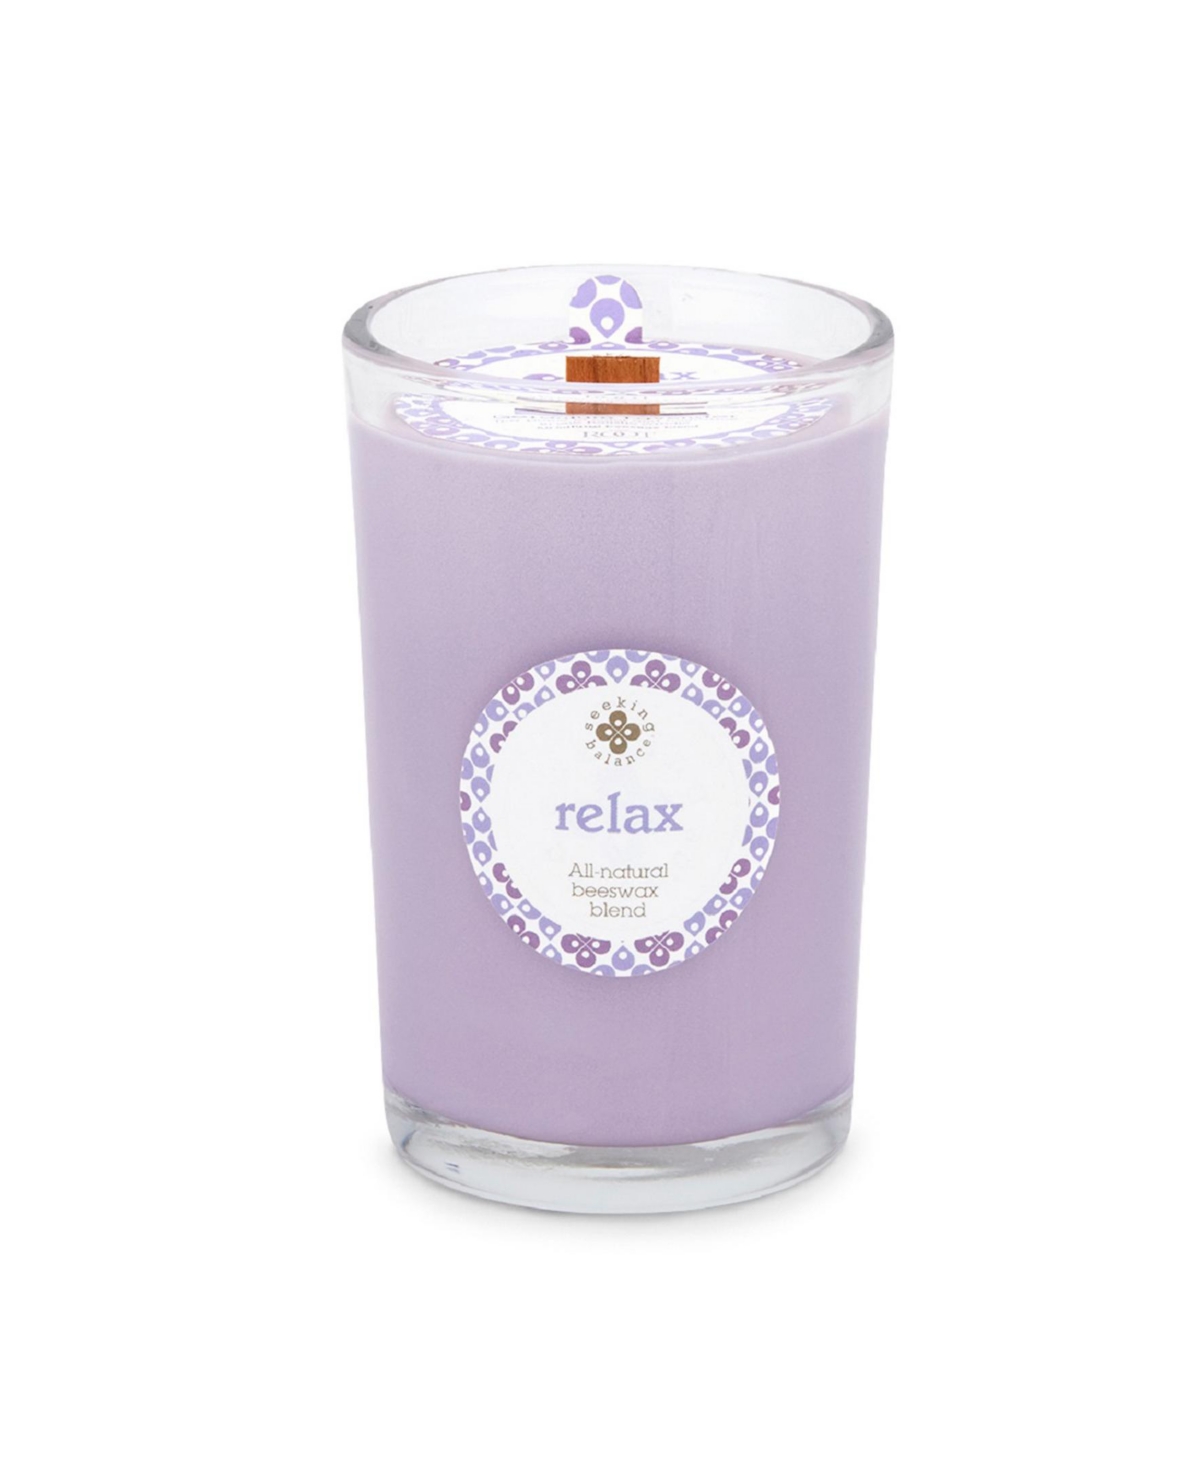 Seeking Balance Relax Geranium Lavender Spa Jar Candle, 8 oz - Lavender